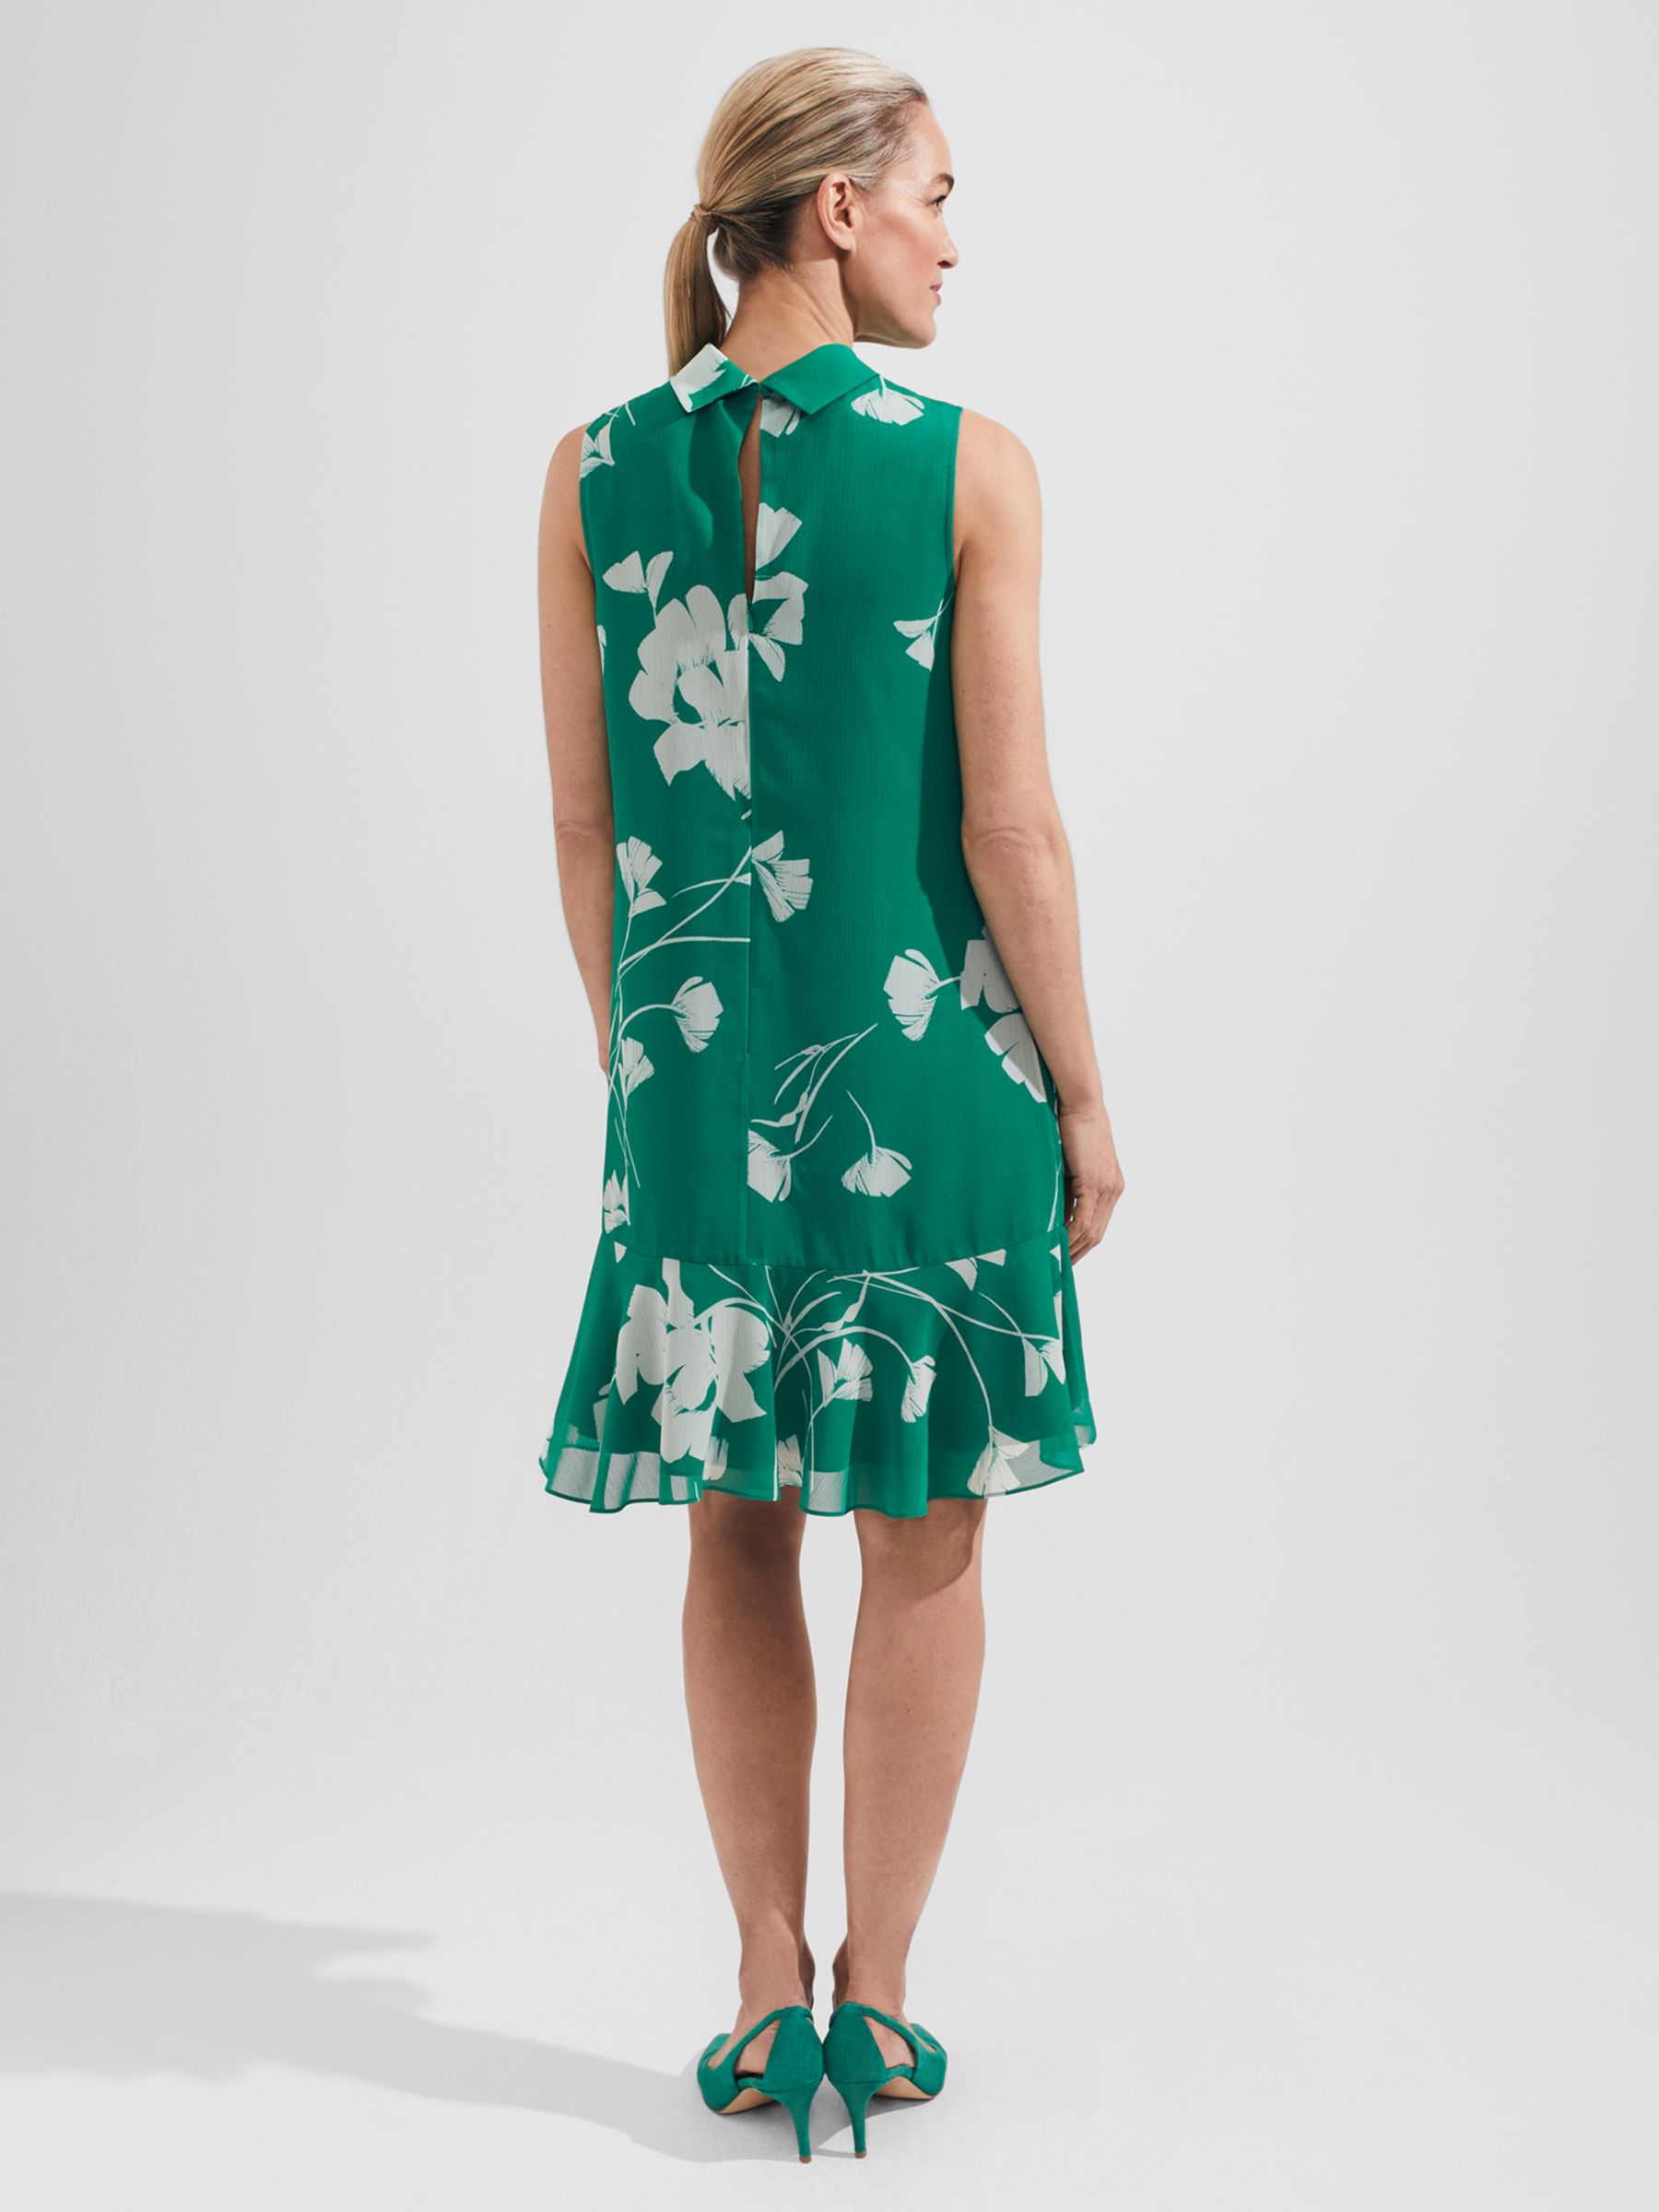 Hobbs Madeline High Neck Floral Print Dress, Green/Ivory, 10